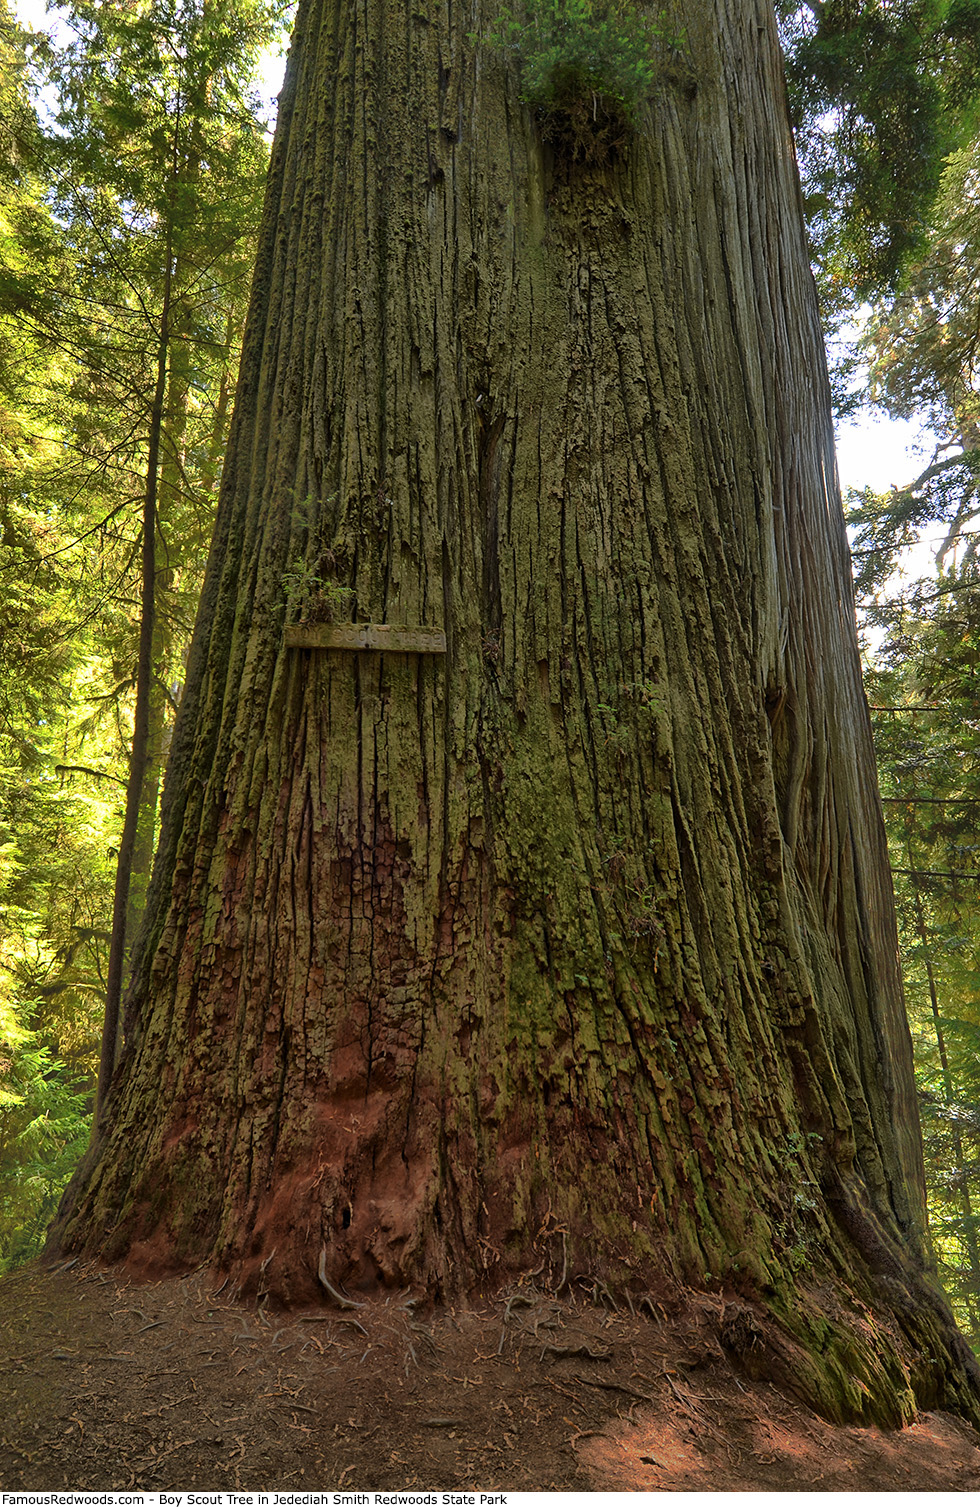 Jedediah Smith Redwoods State Park - Boy Scout Tree